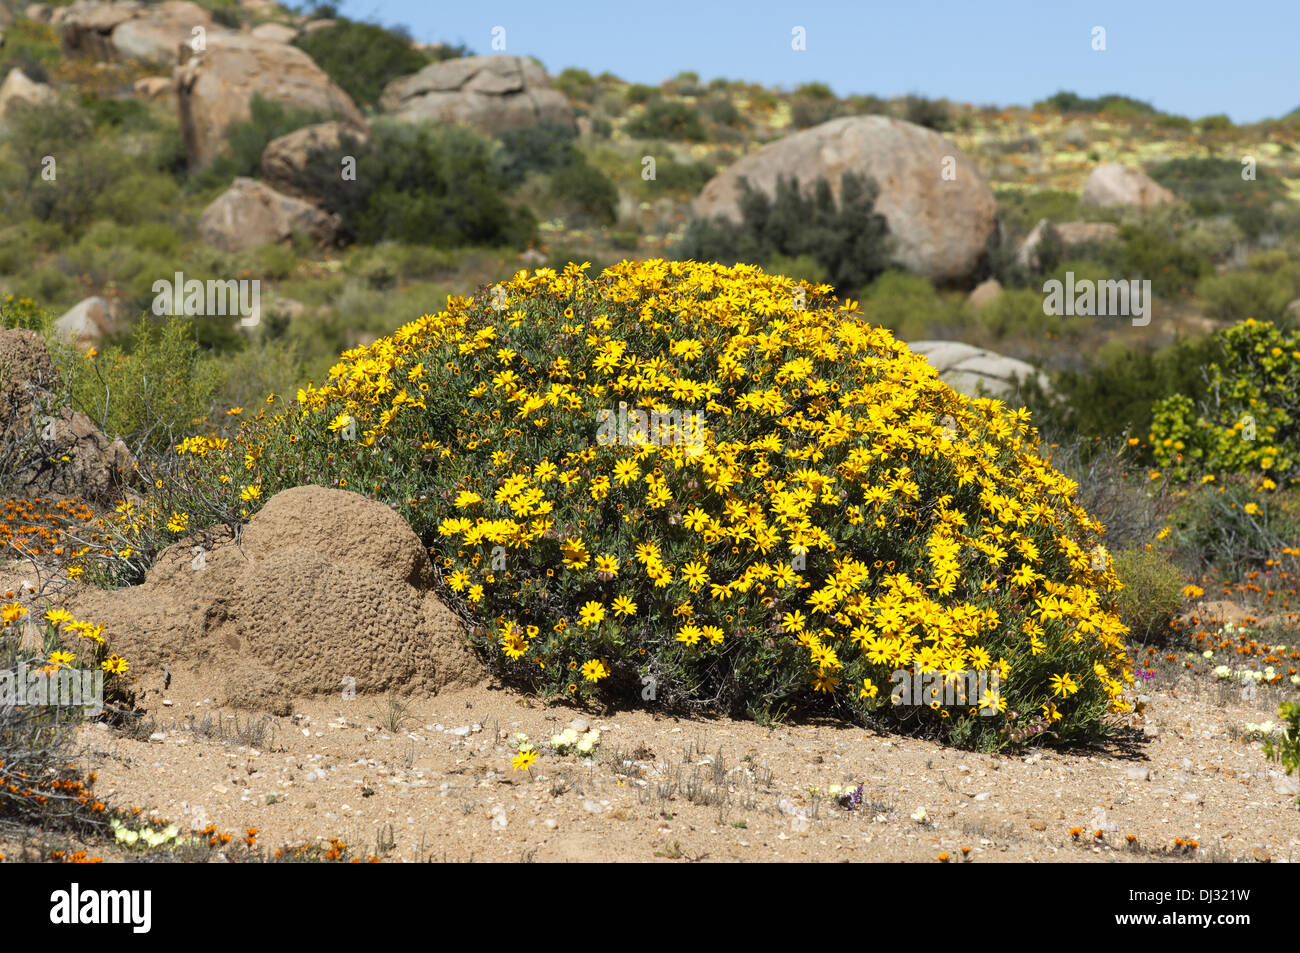 Yellow-flowering shrub of Skaapbos Stock Photo